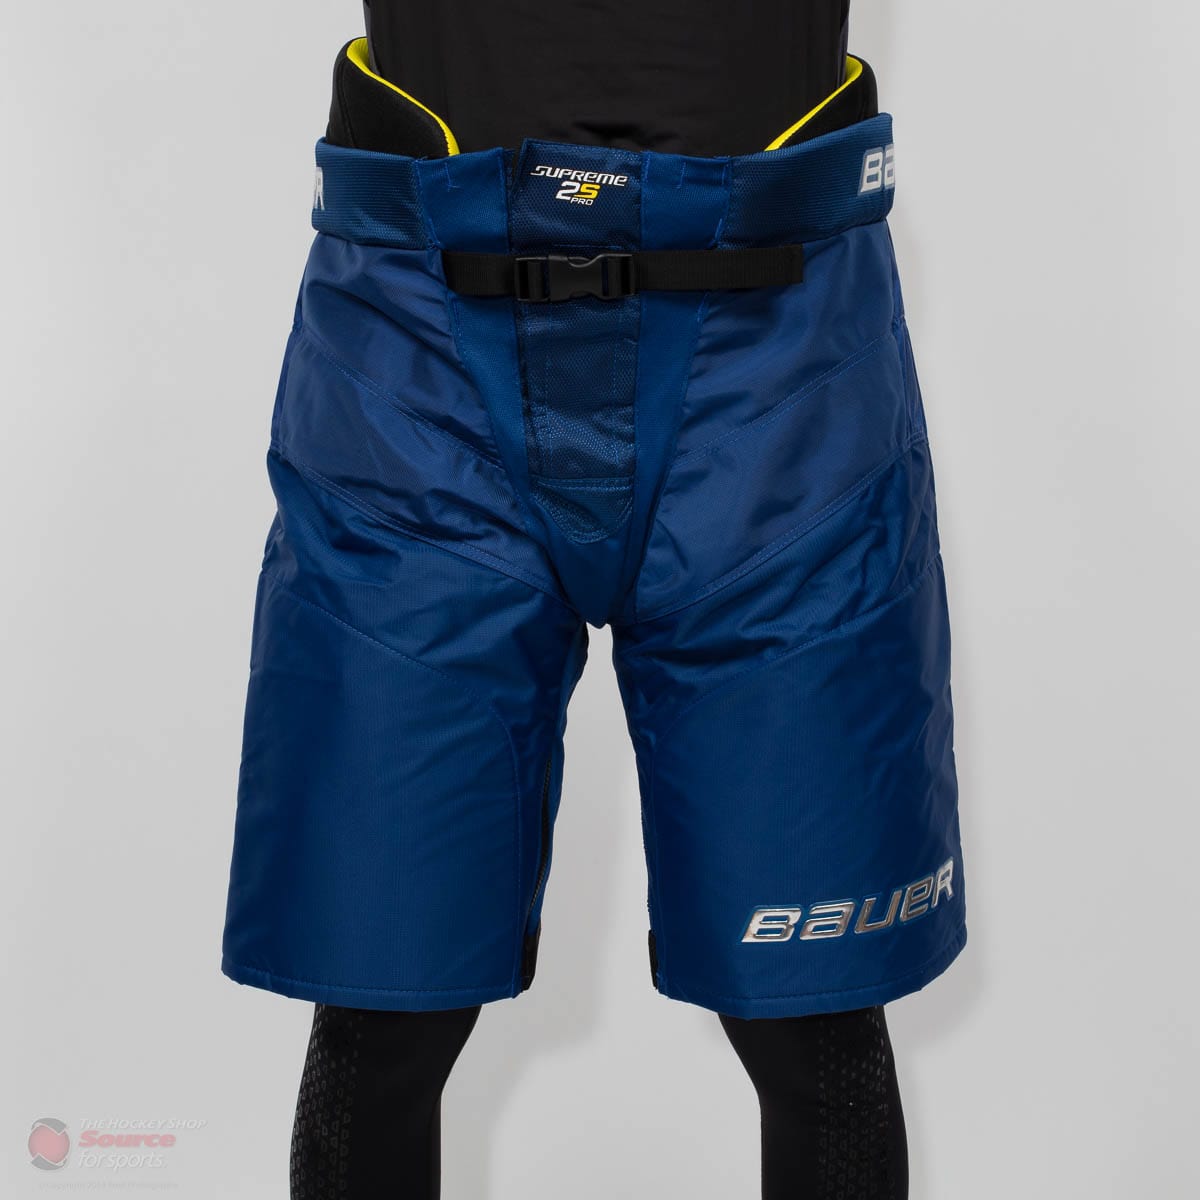 Bauer Supreme 2S Pro Senior Hockey Pant Shells